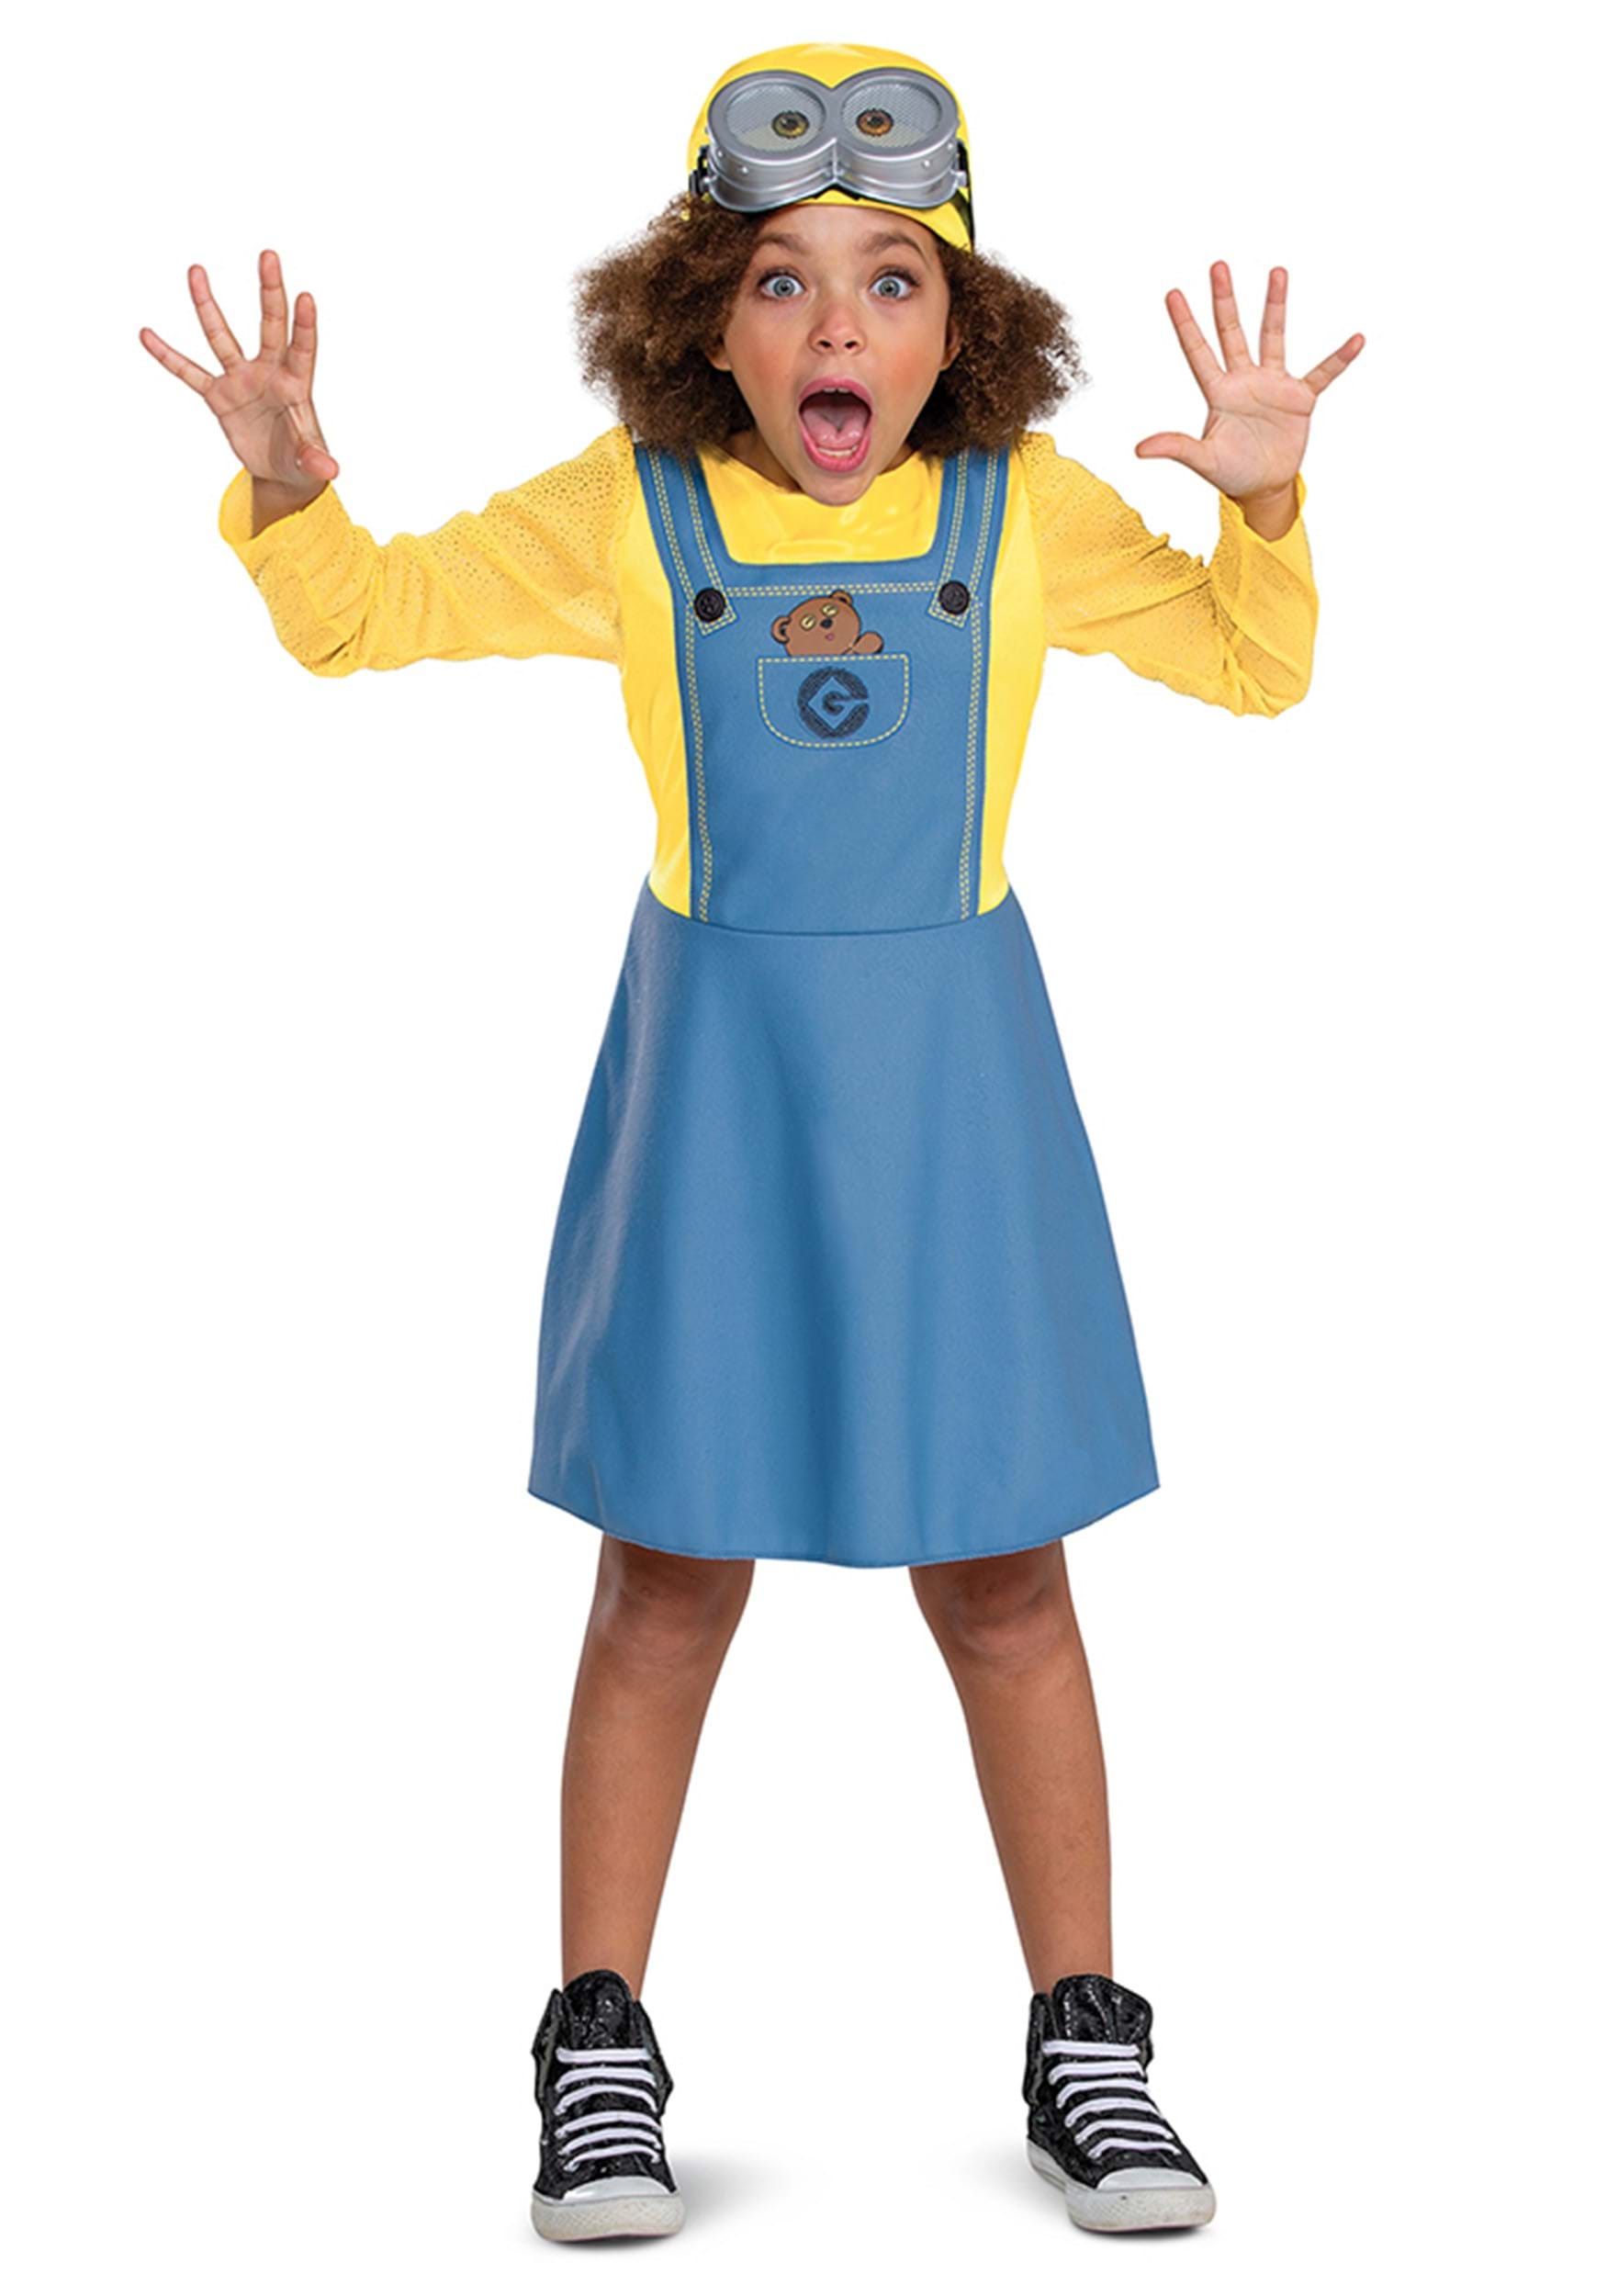 Photos - Fancy Dress Winsun Dress Disguise Minion Kid's Dress Costume Blue/Gray/Yellow DI119099 